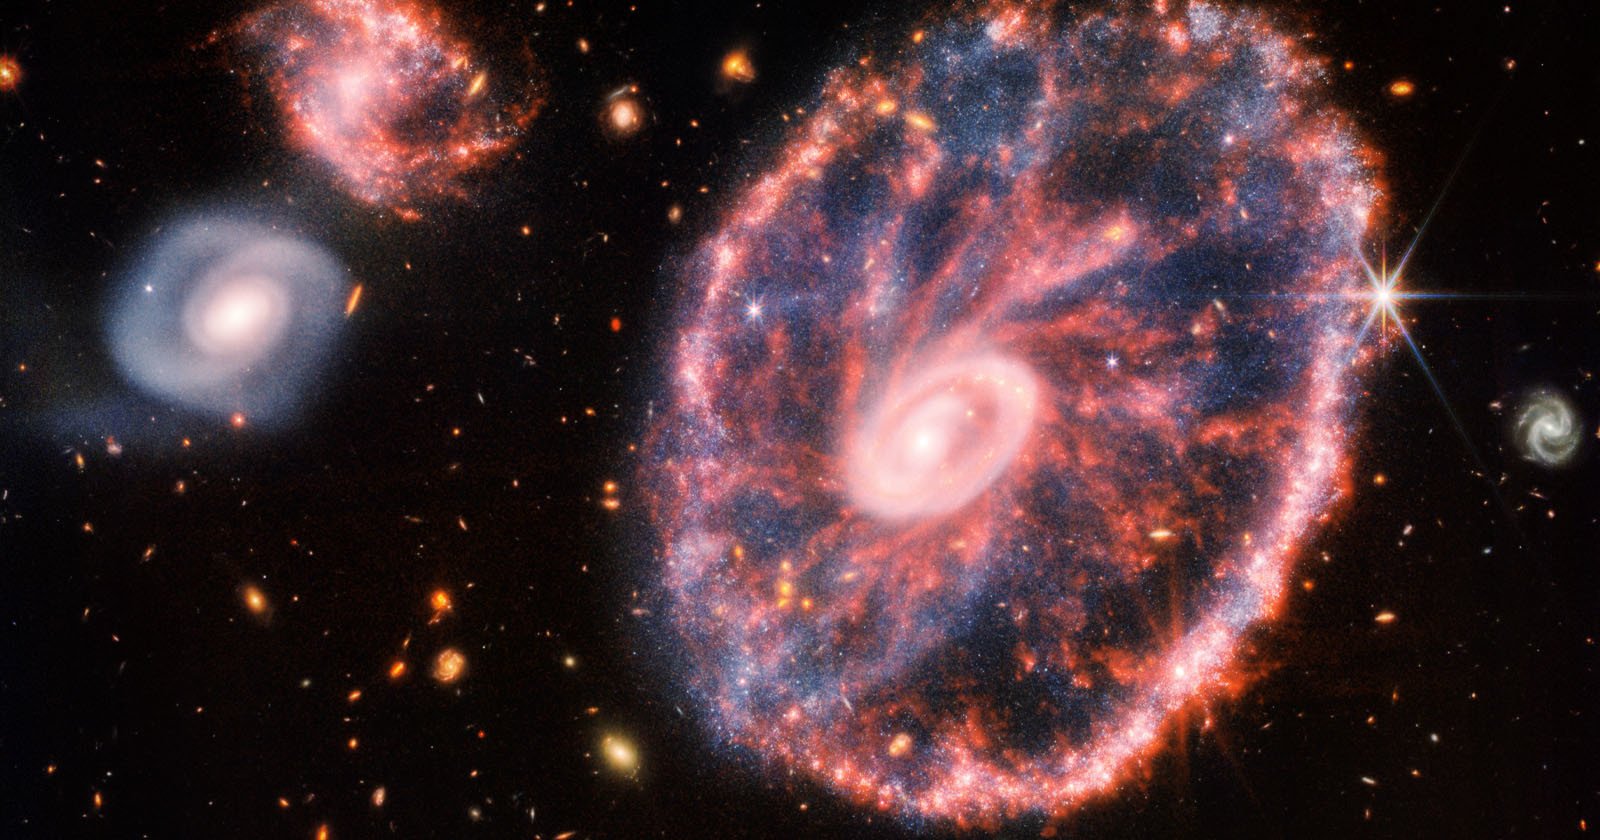  james webb telescope captures incredible photo cartwheel galaxy 